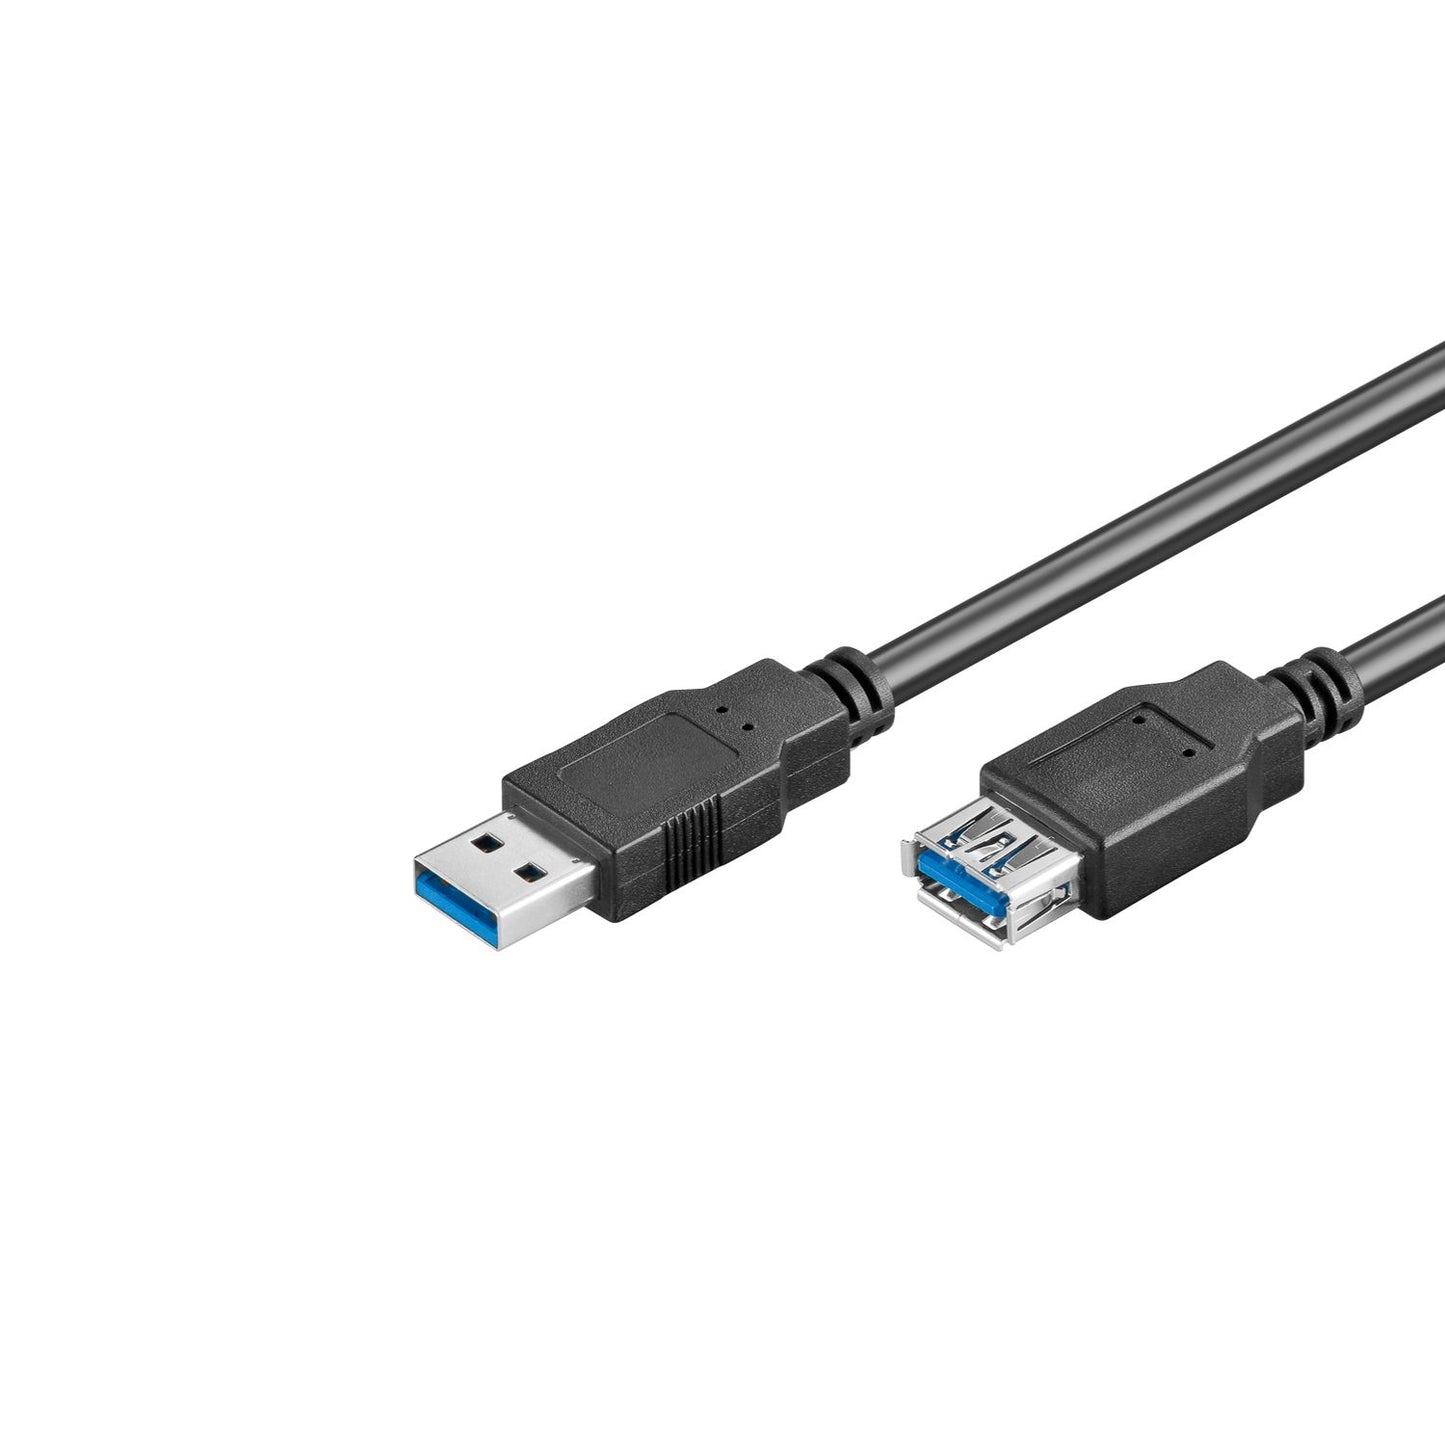 Rallonge USB 3.0 A mâle - A femelle, noir